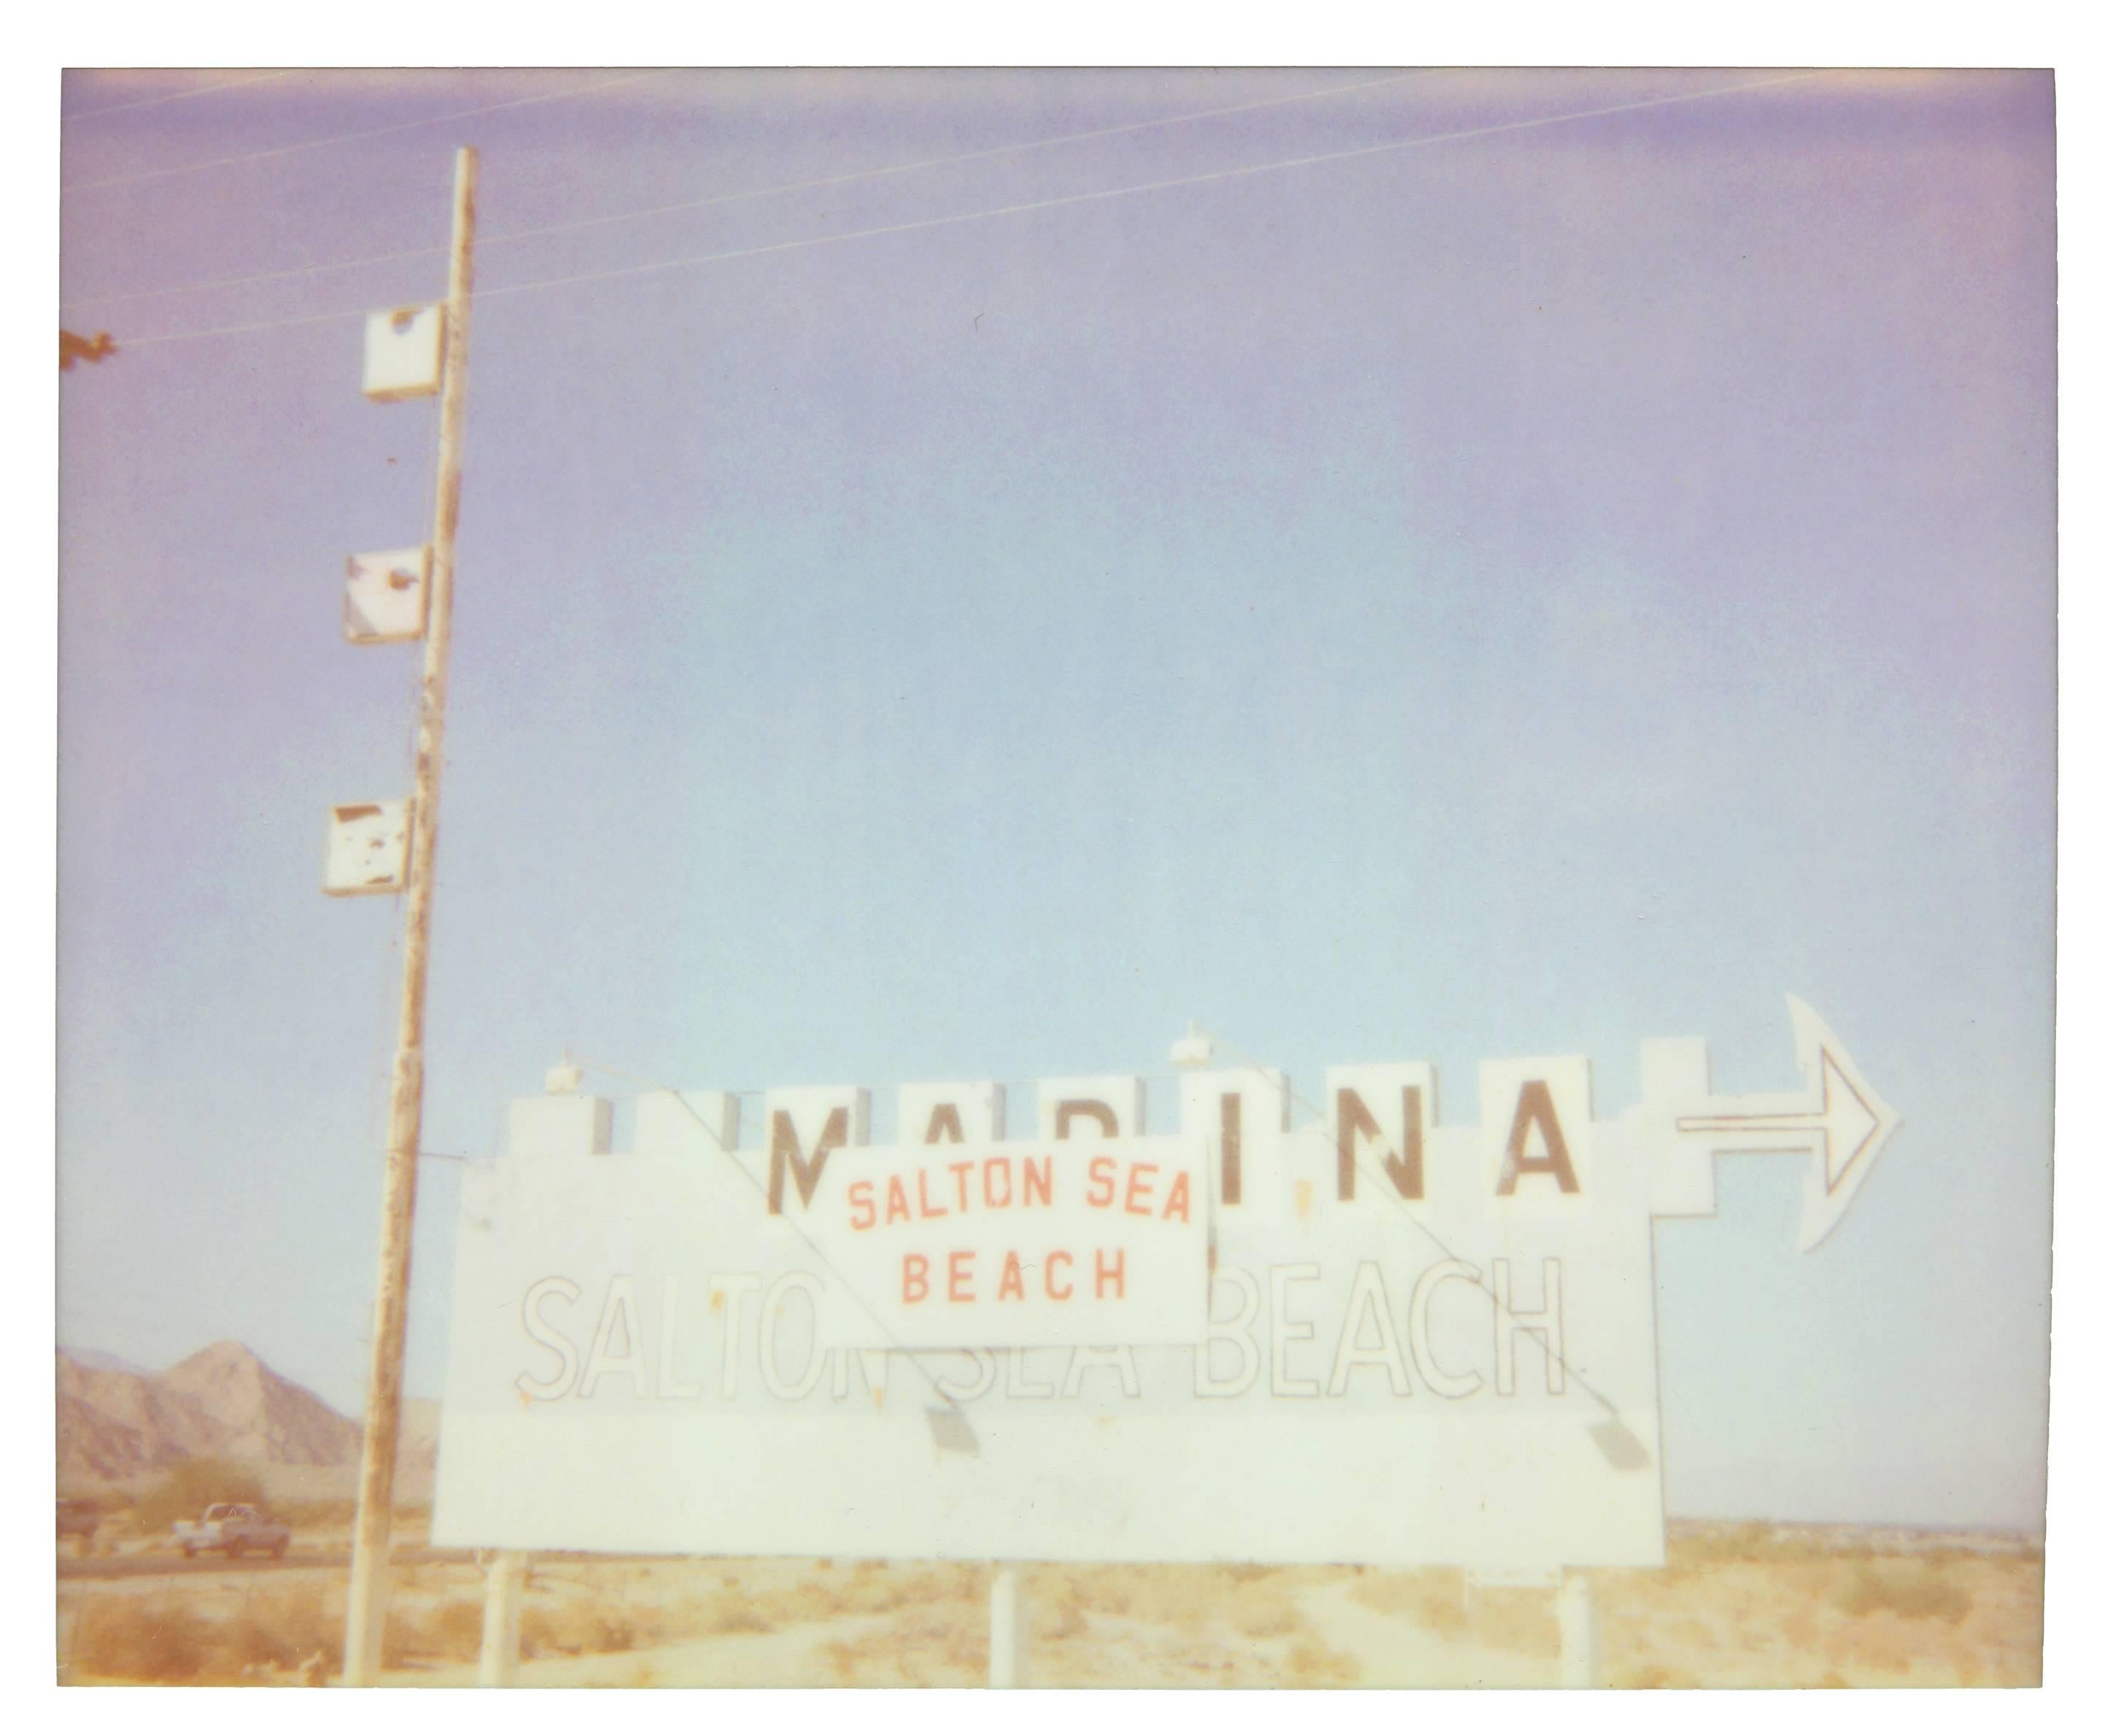 Stefanie Schneider Color Photograph - Salton Sea Marina (California Badlands) - Polaroid, Landscape, Contemporary